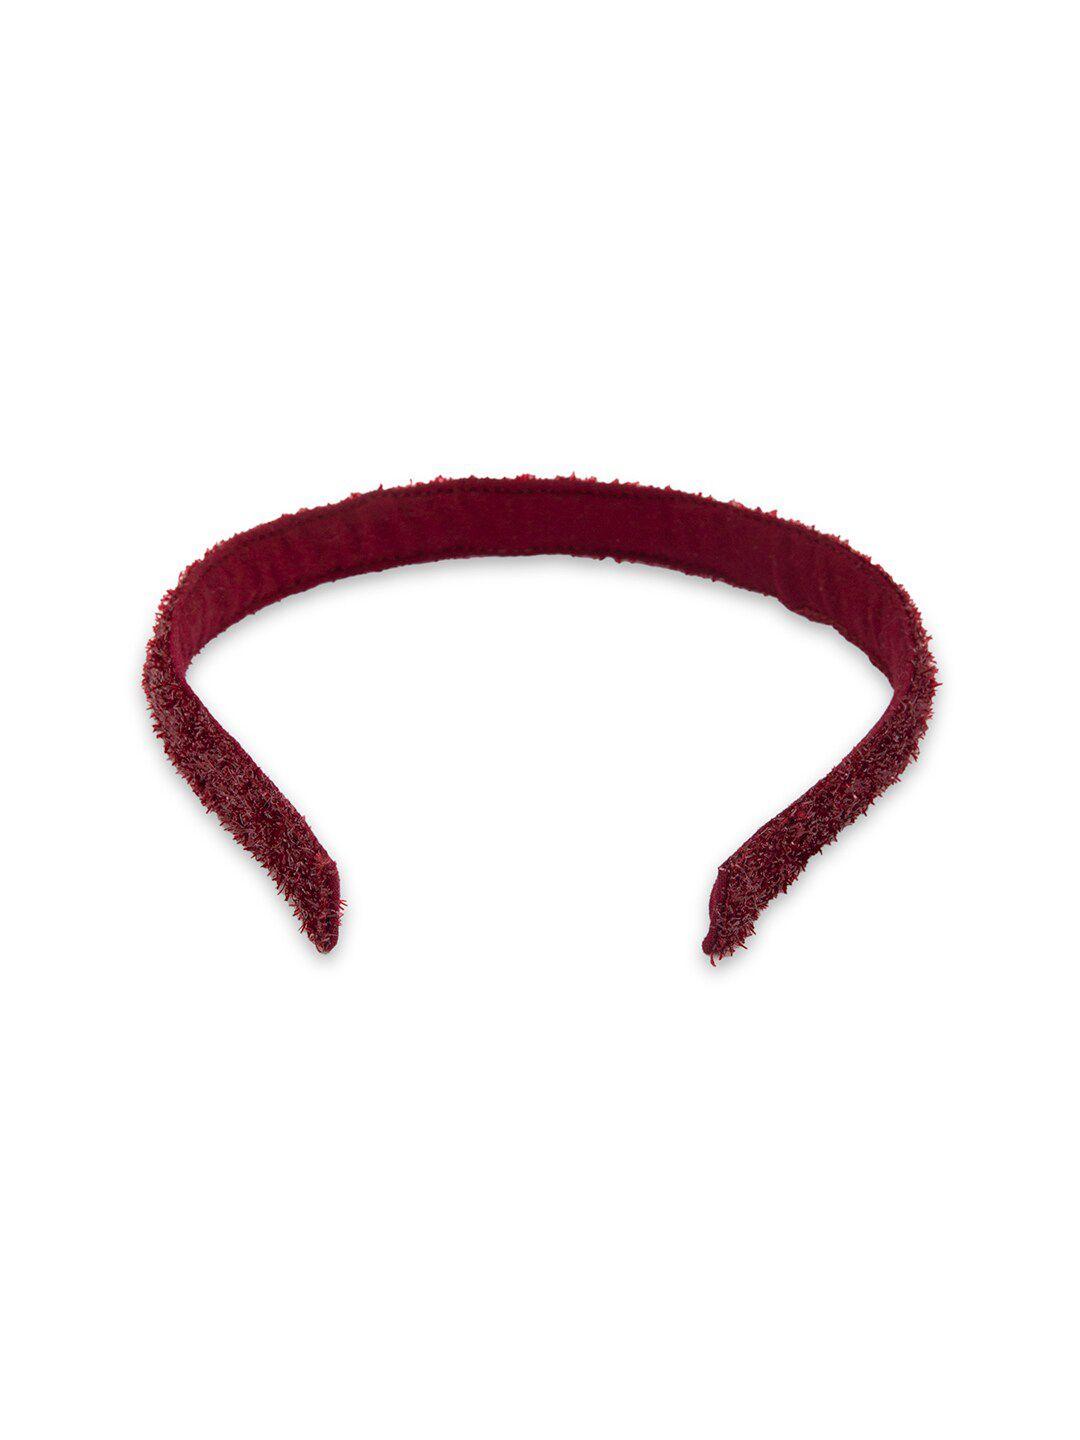 deebaco girls red embellished hairband